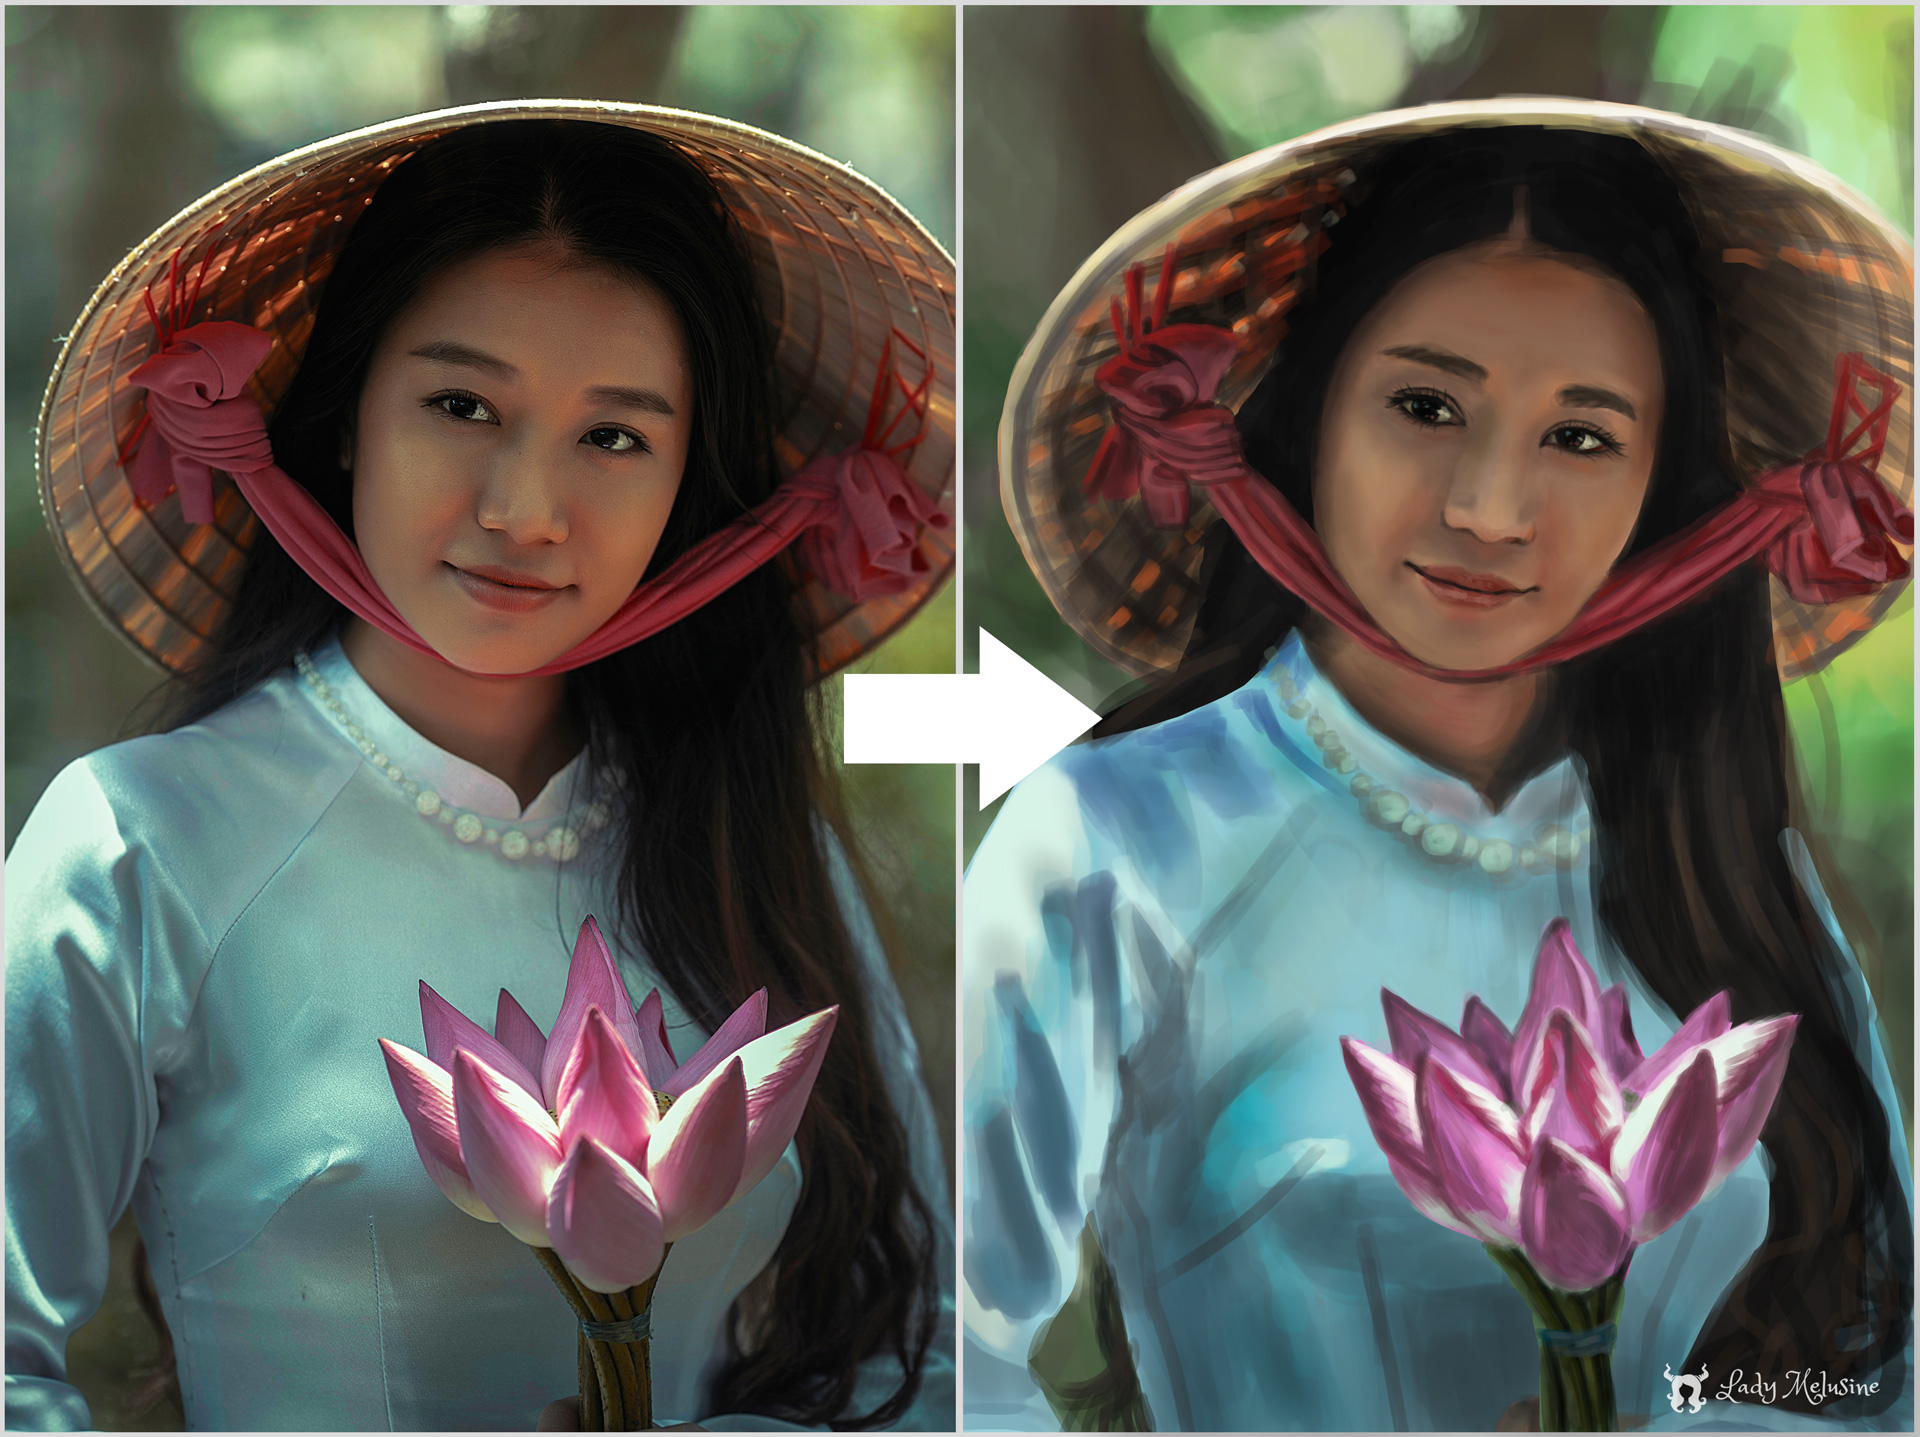 Digital Painting Lady Melusine Etude Femme asiatique